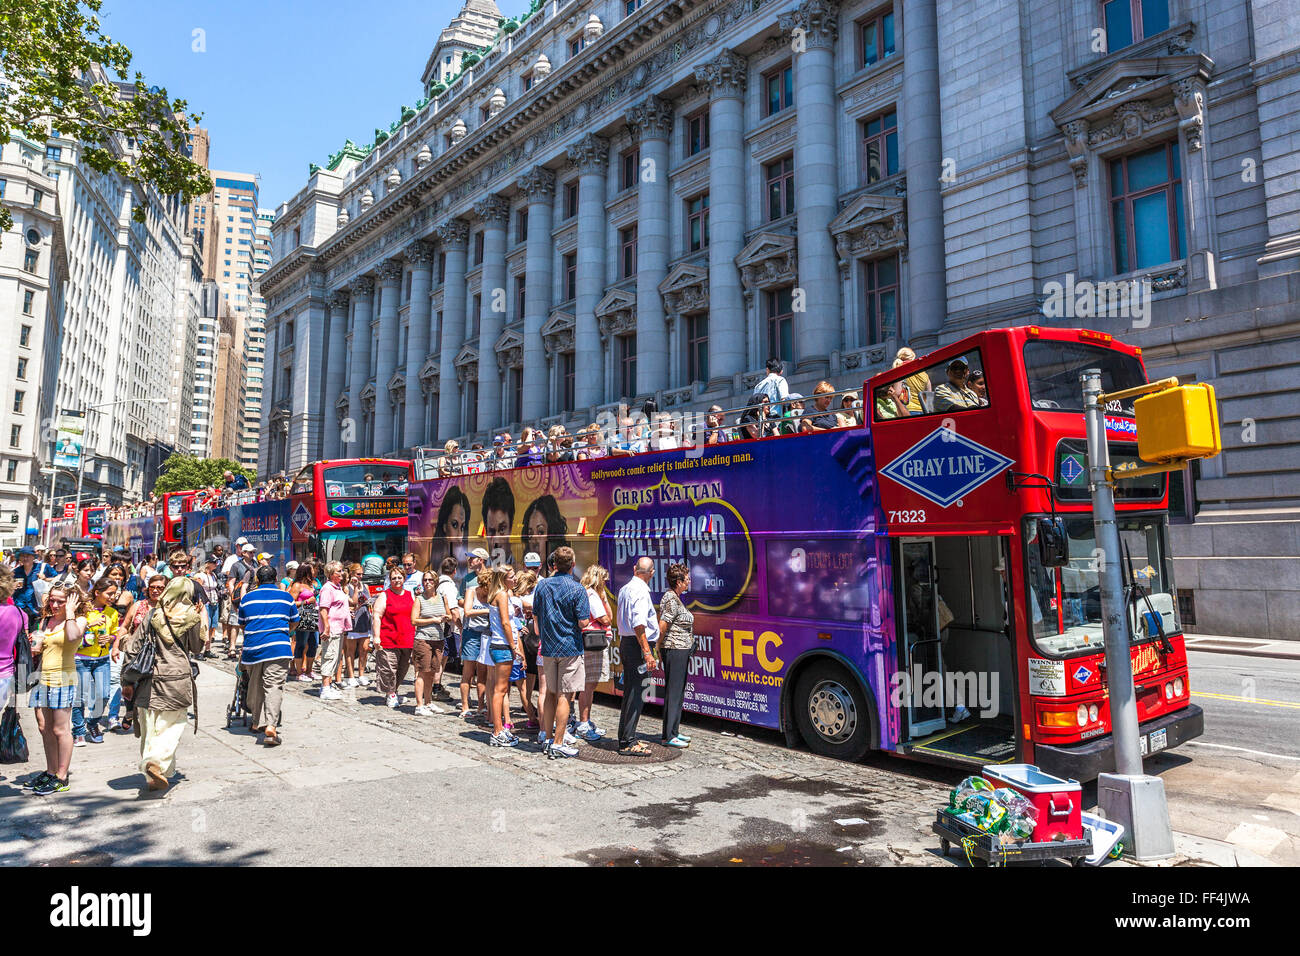 Sightseeing-tourbusse herauf Passagiere, London, England, UK. Stockfoto